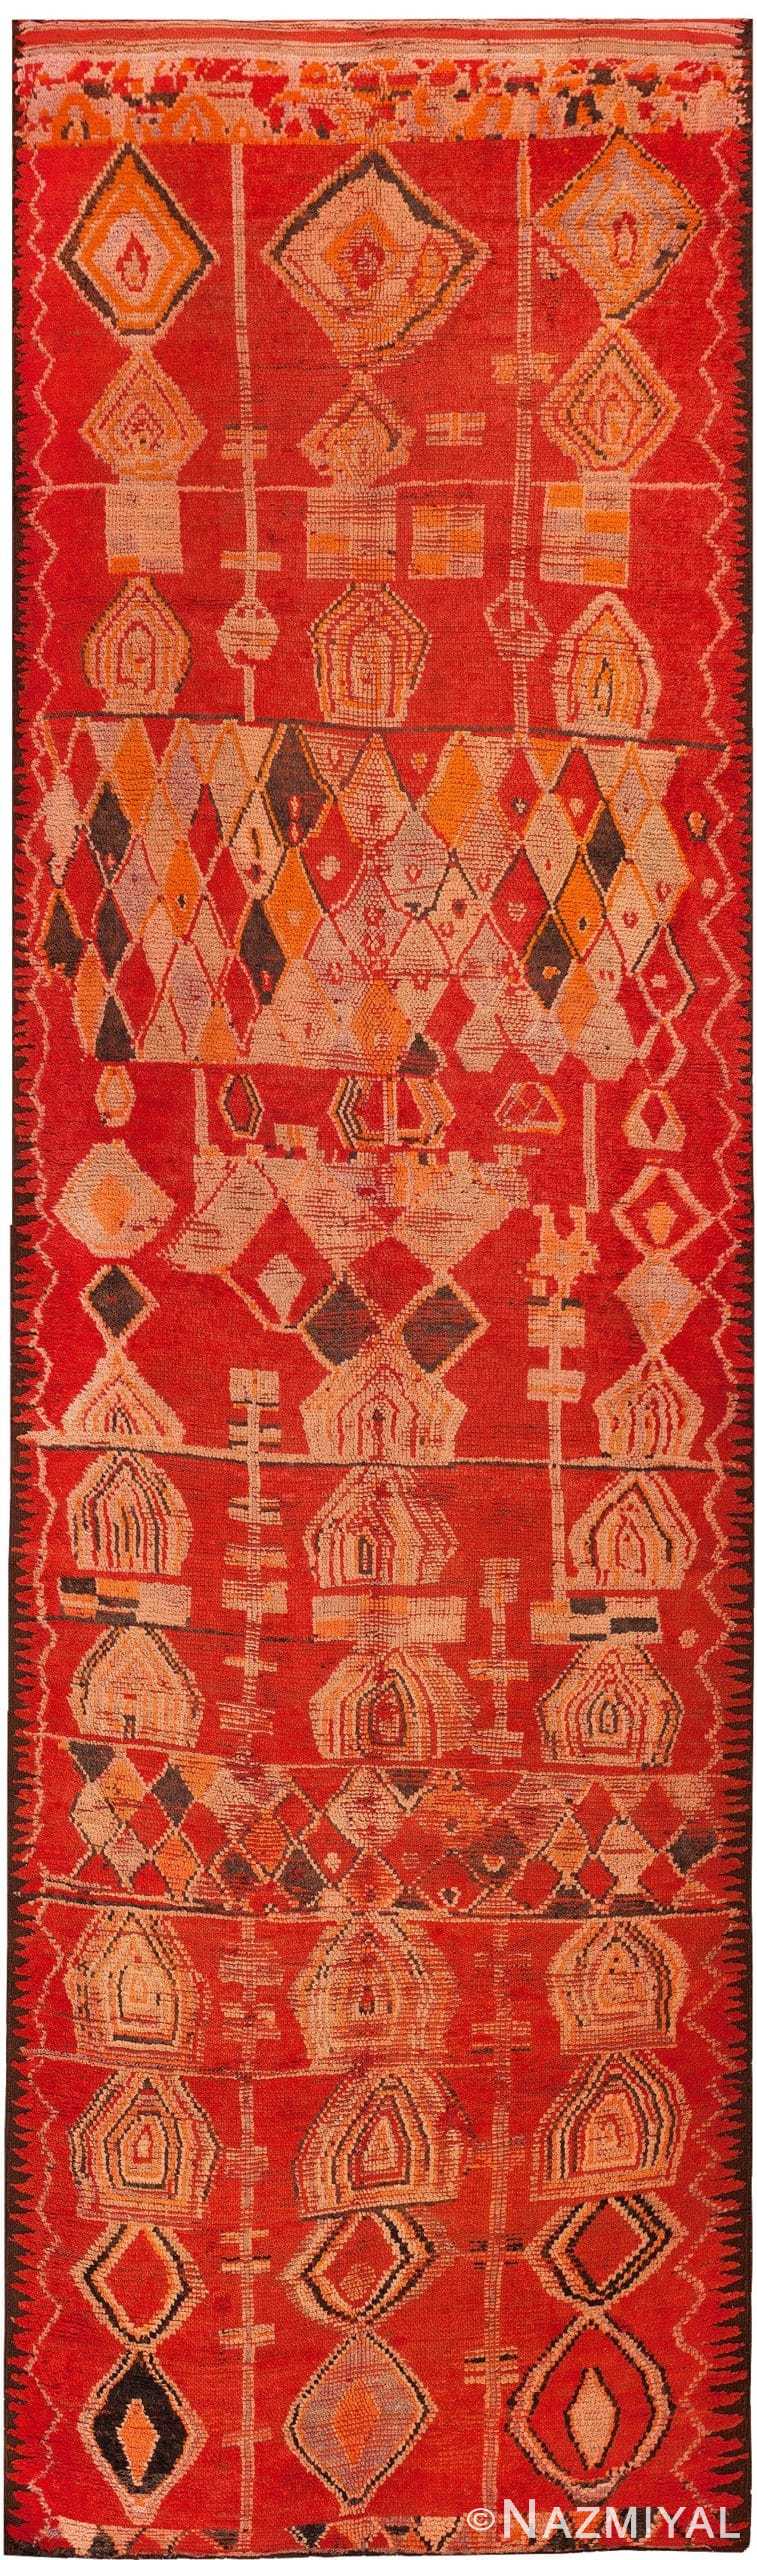 Vintage Red Moroccan Rug 45832 Detail/Large View